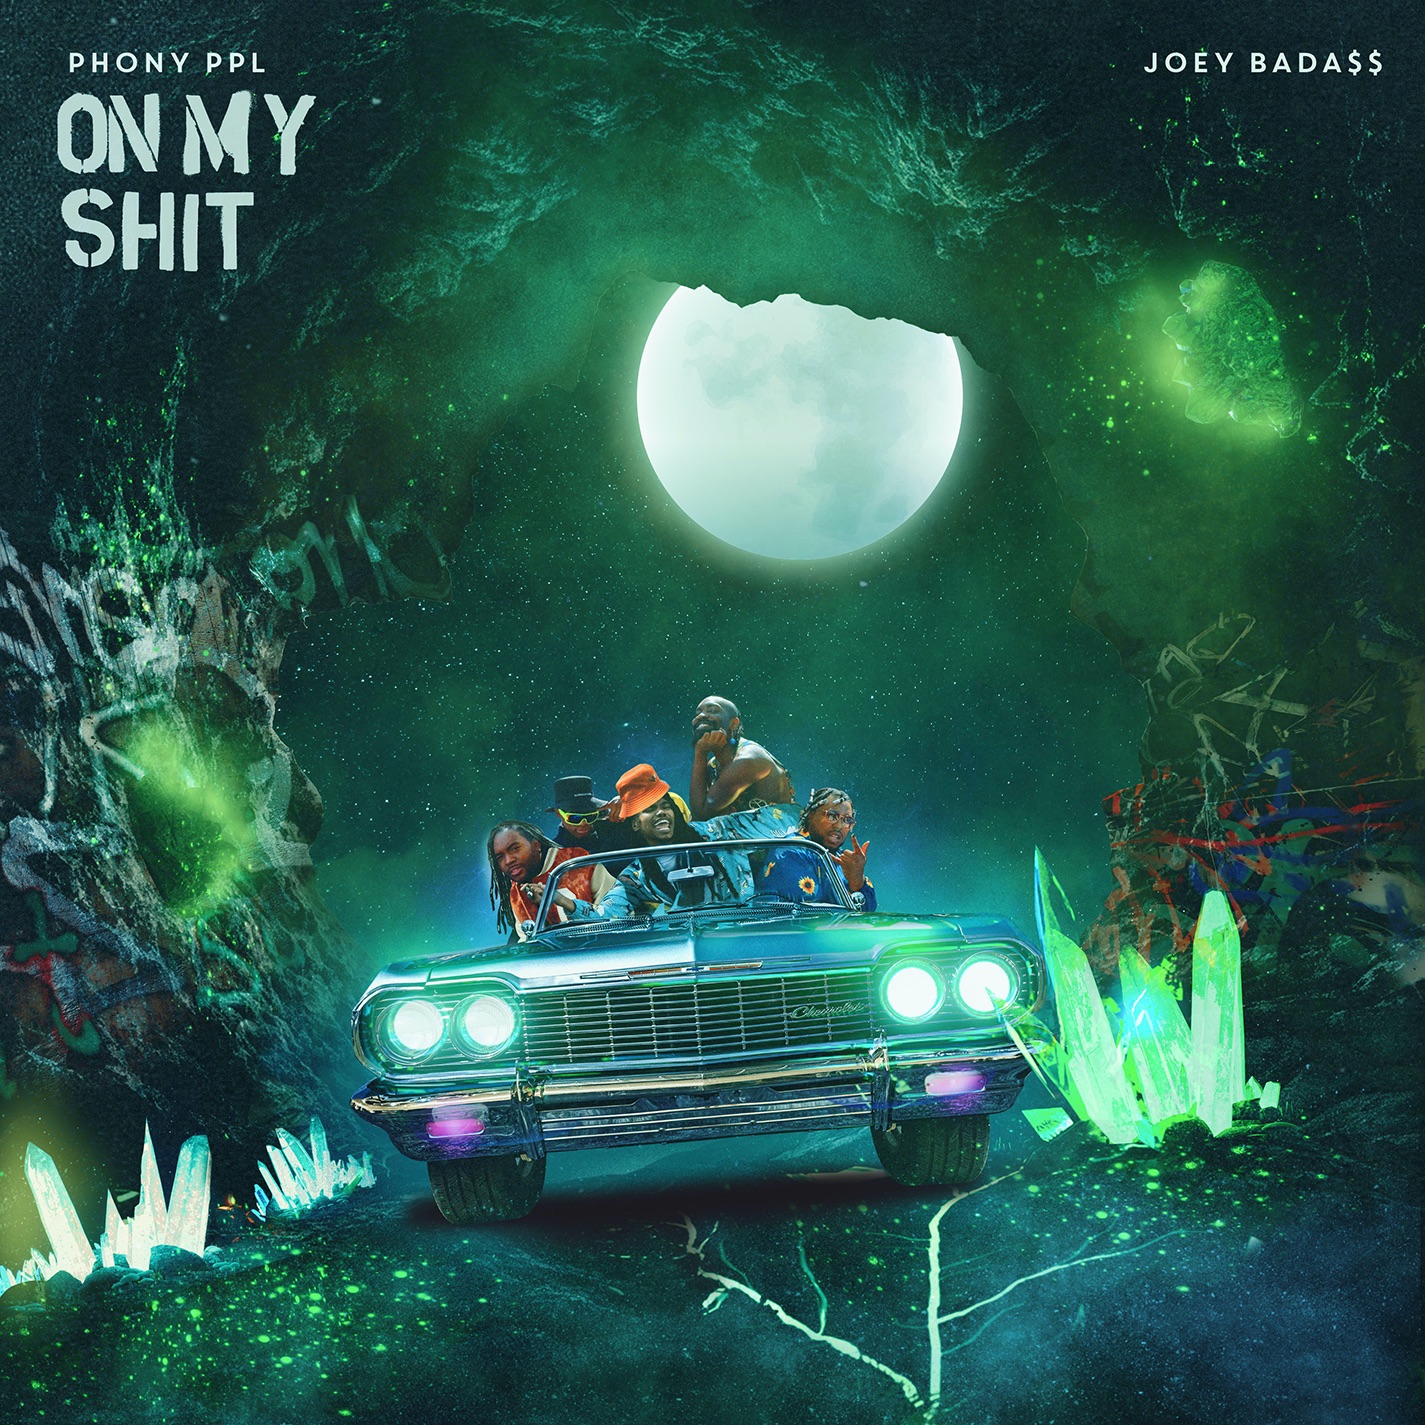 Phony Ppl - On My Shit (feat. Joey Bada$$) - Single